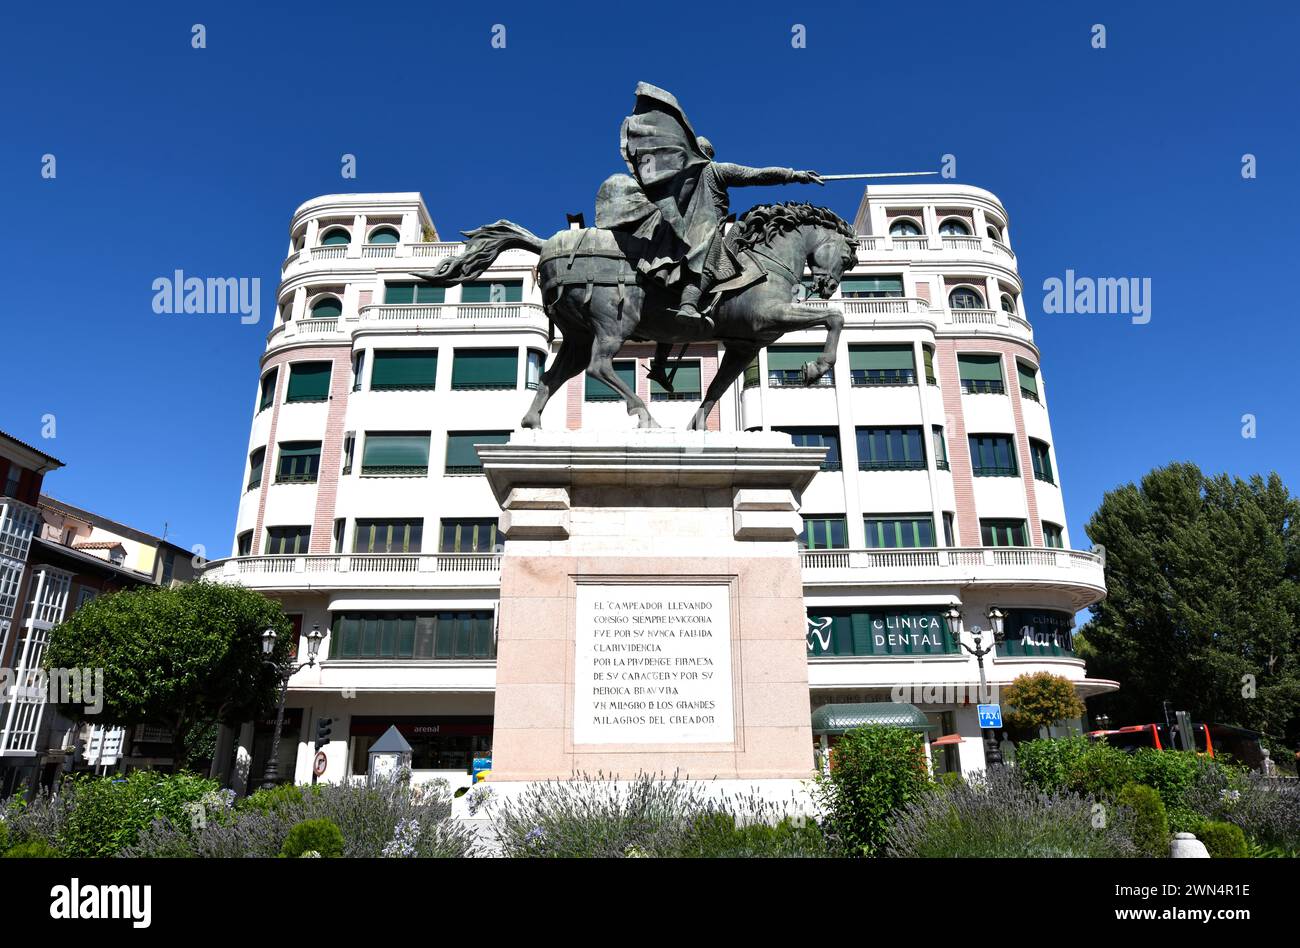 Statua ecuestriana di El cid Campeador realizzata da Juan Cristobal Gonzalez Quesada. Mio Cid Square, Burgos, Castilla y Leon, Spagna. Foto Stock